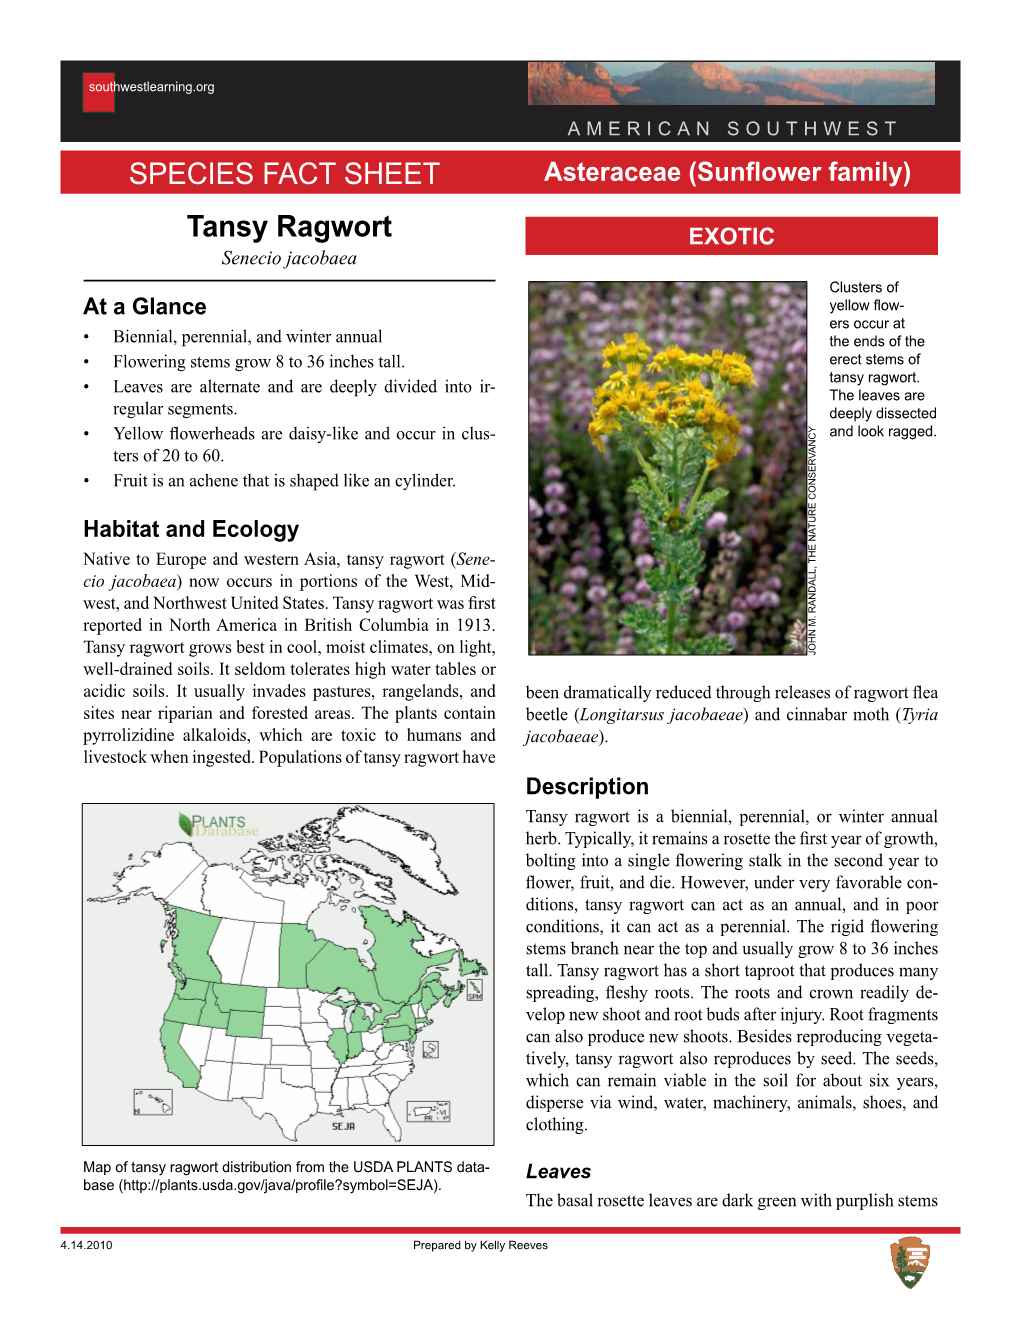 Tansy Ragwort Species Fact Sheet